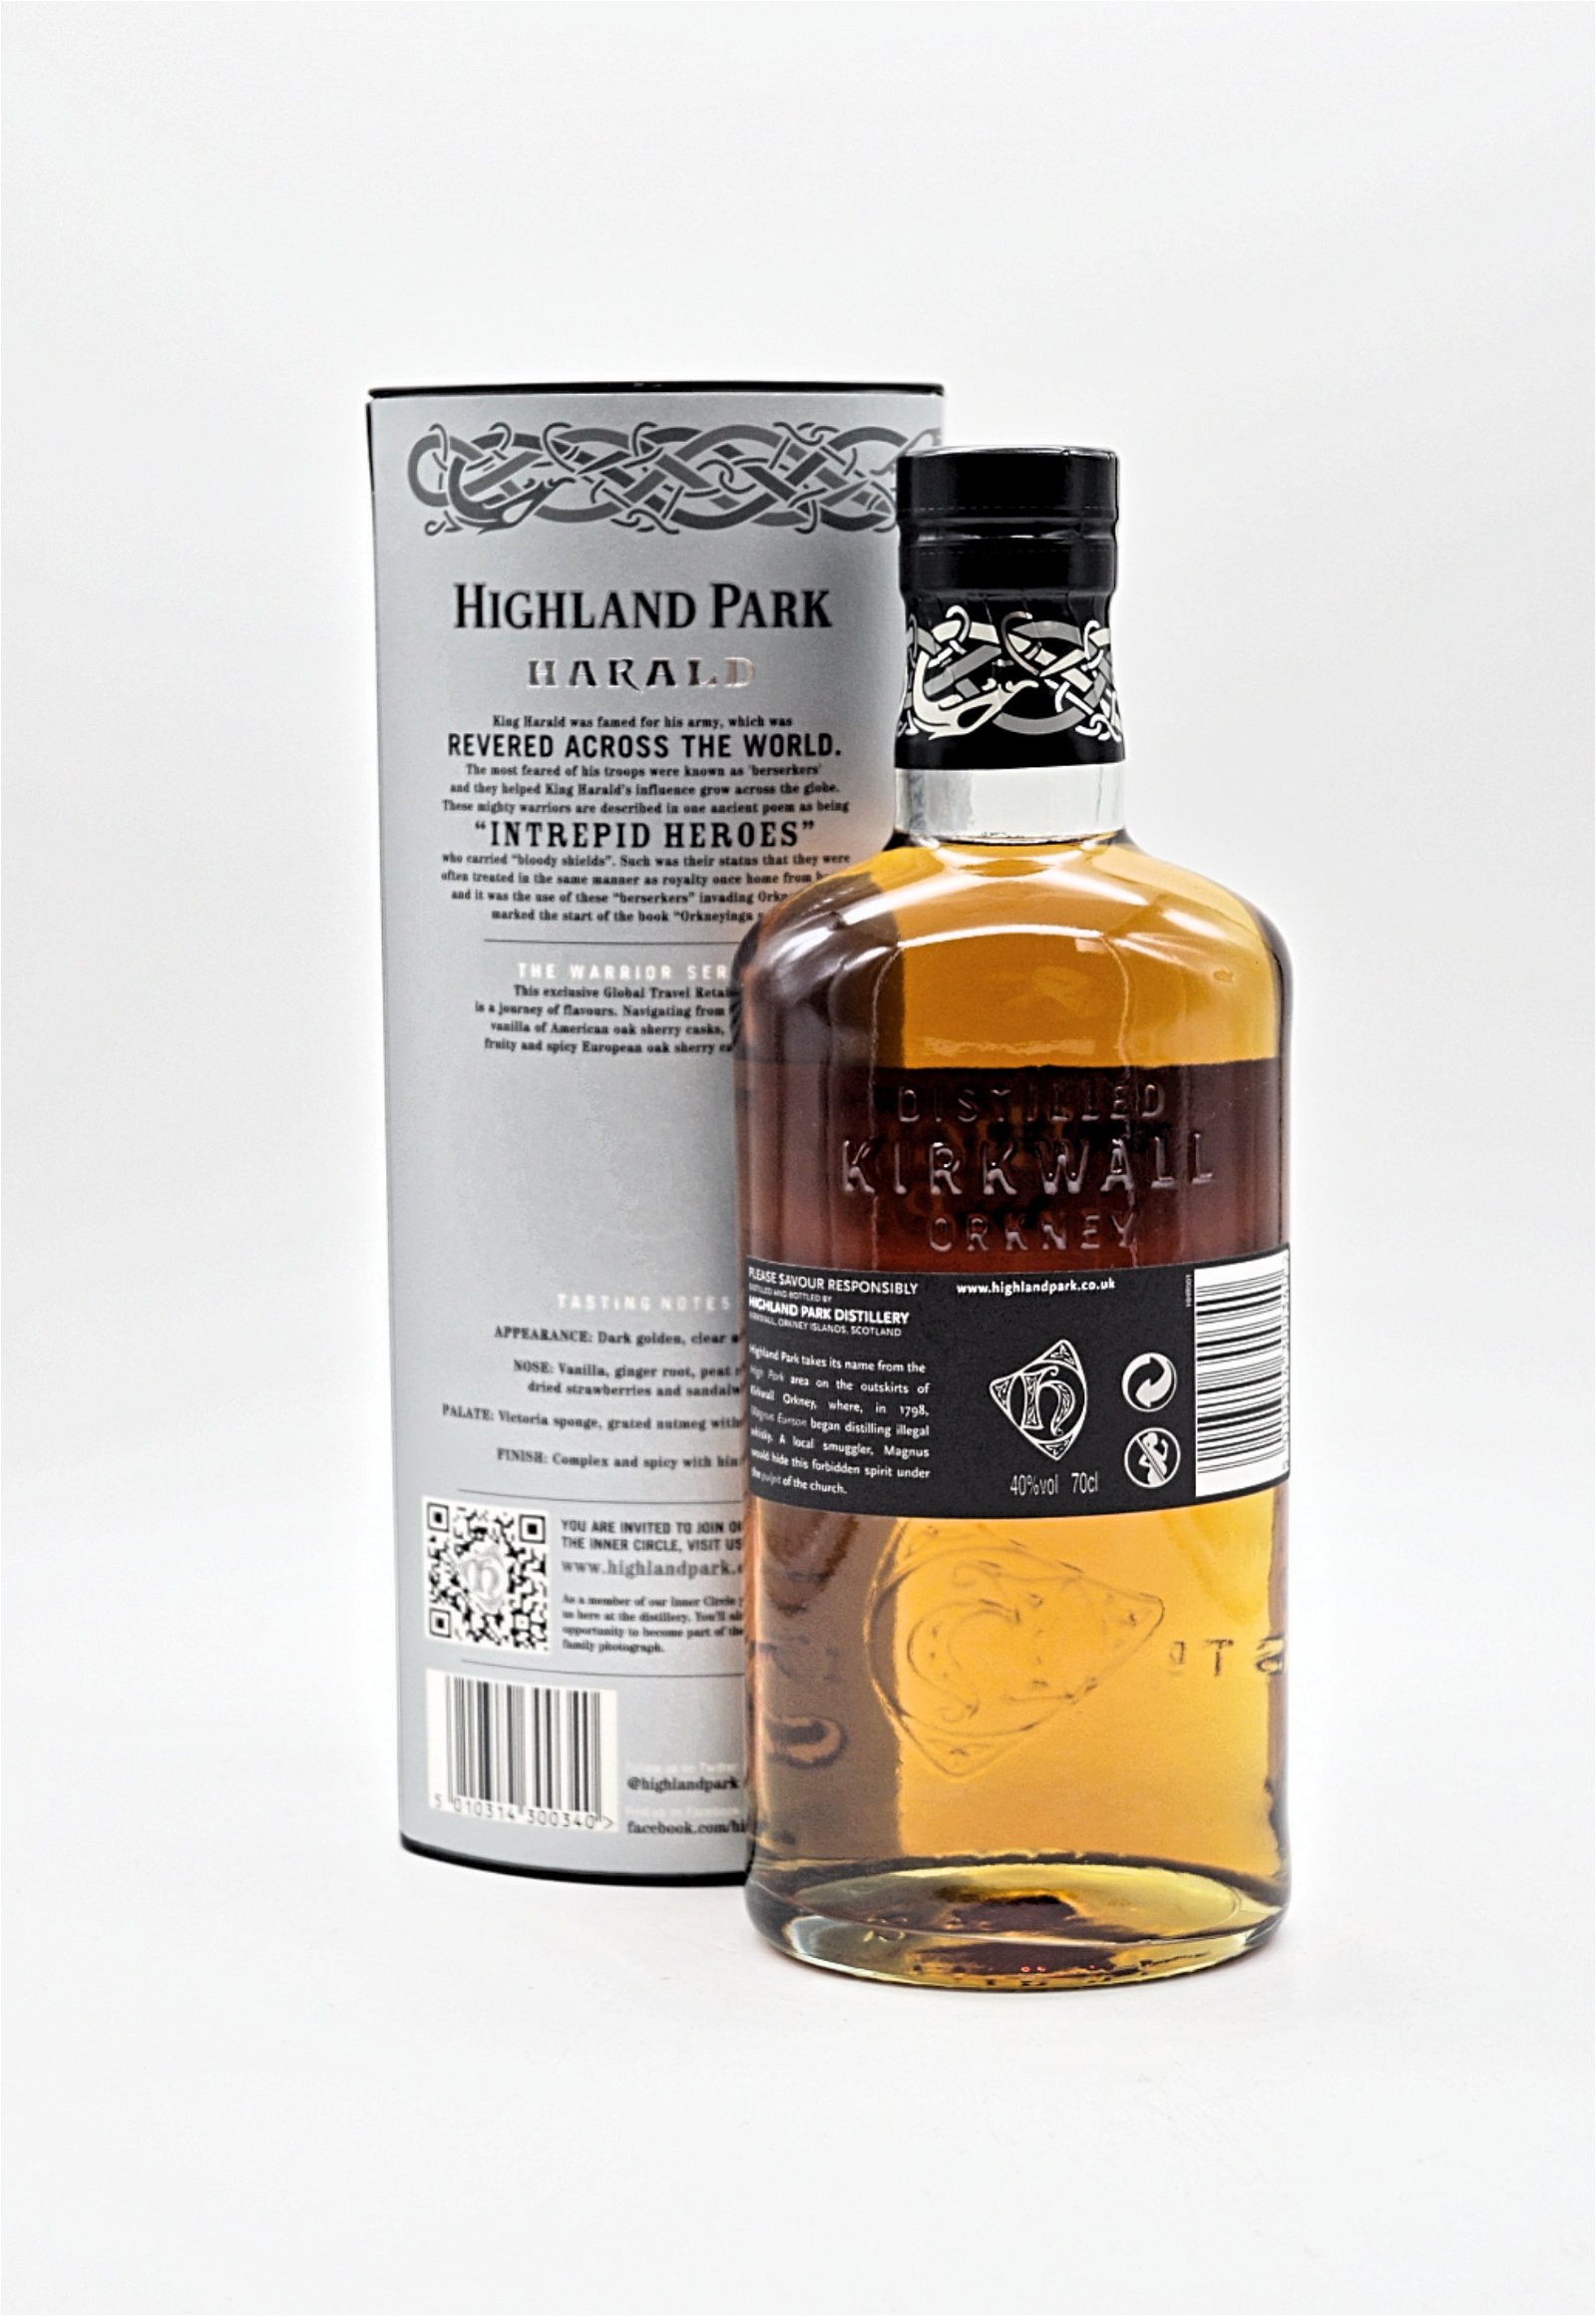 Highland Park Harald Single Malt Scotch Whisky